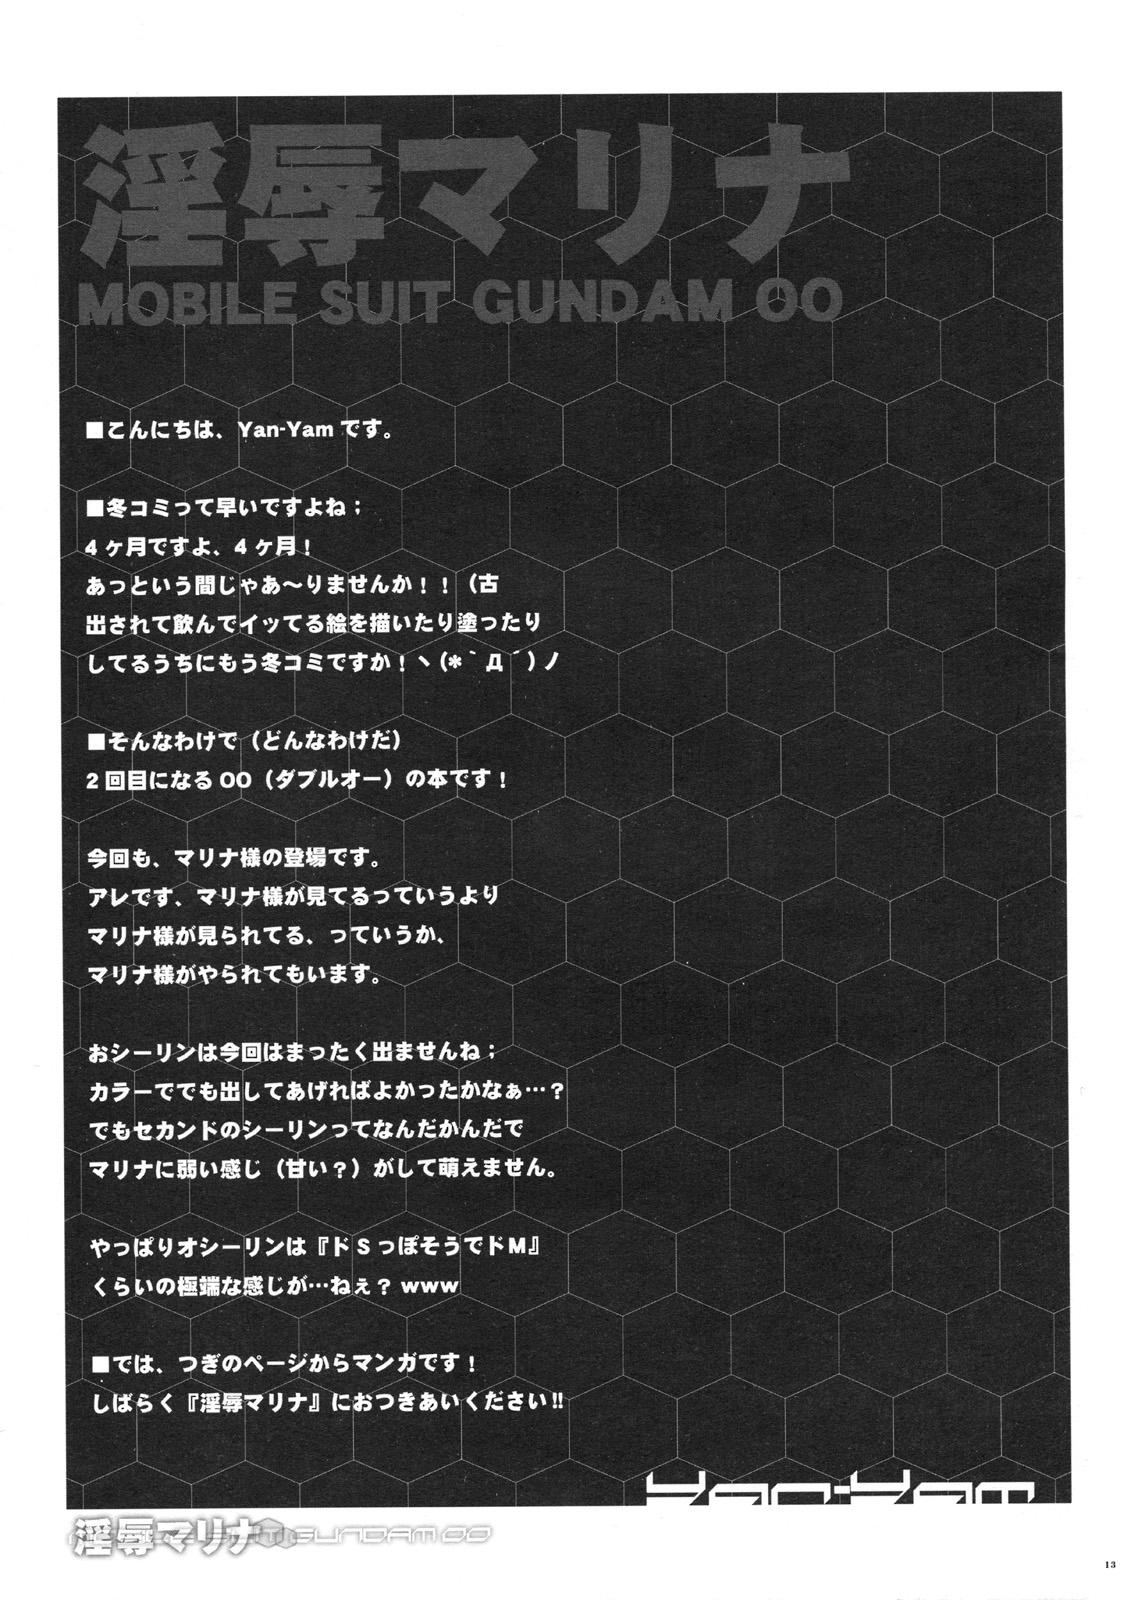 Concha Injoku Marina - Gundam 00 Grandpa - Page 12